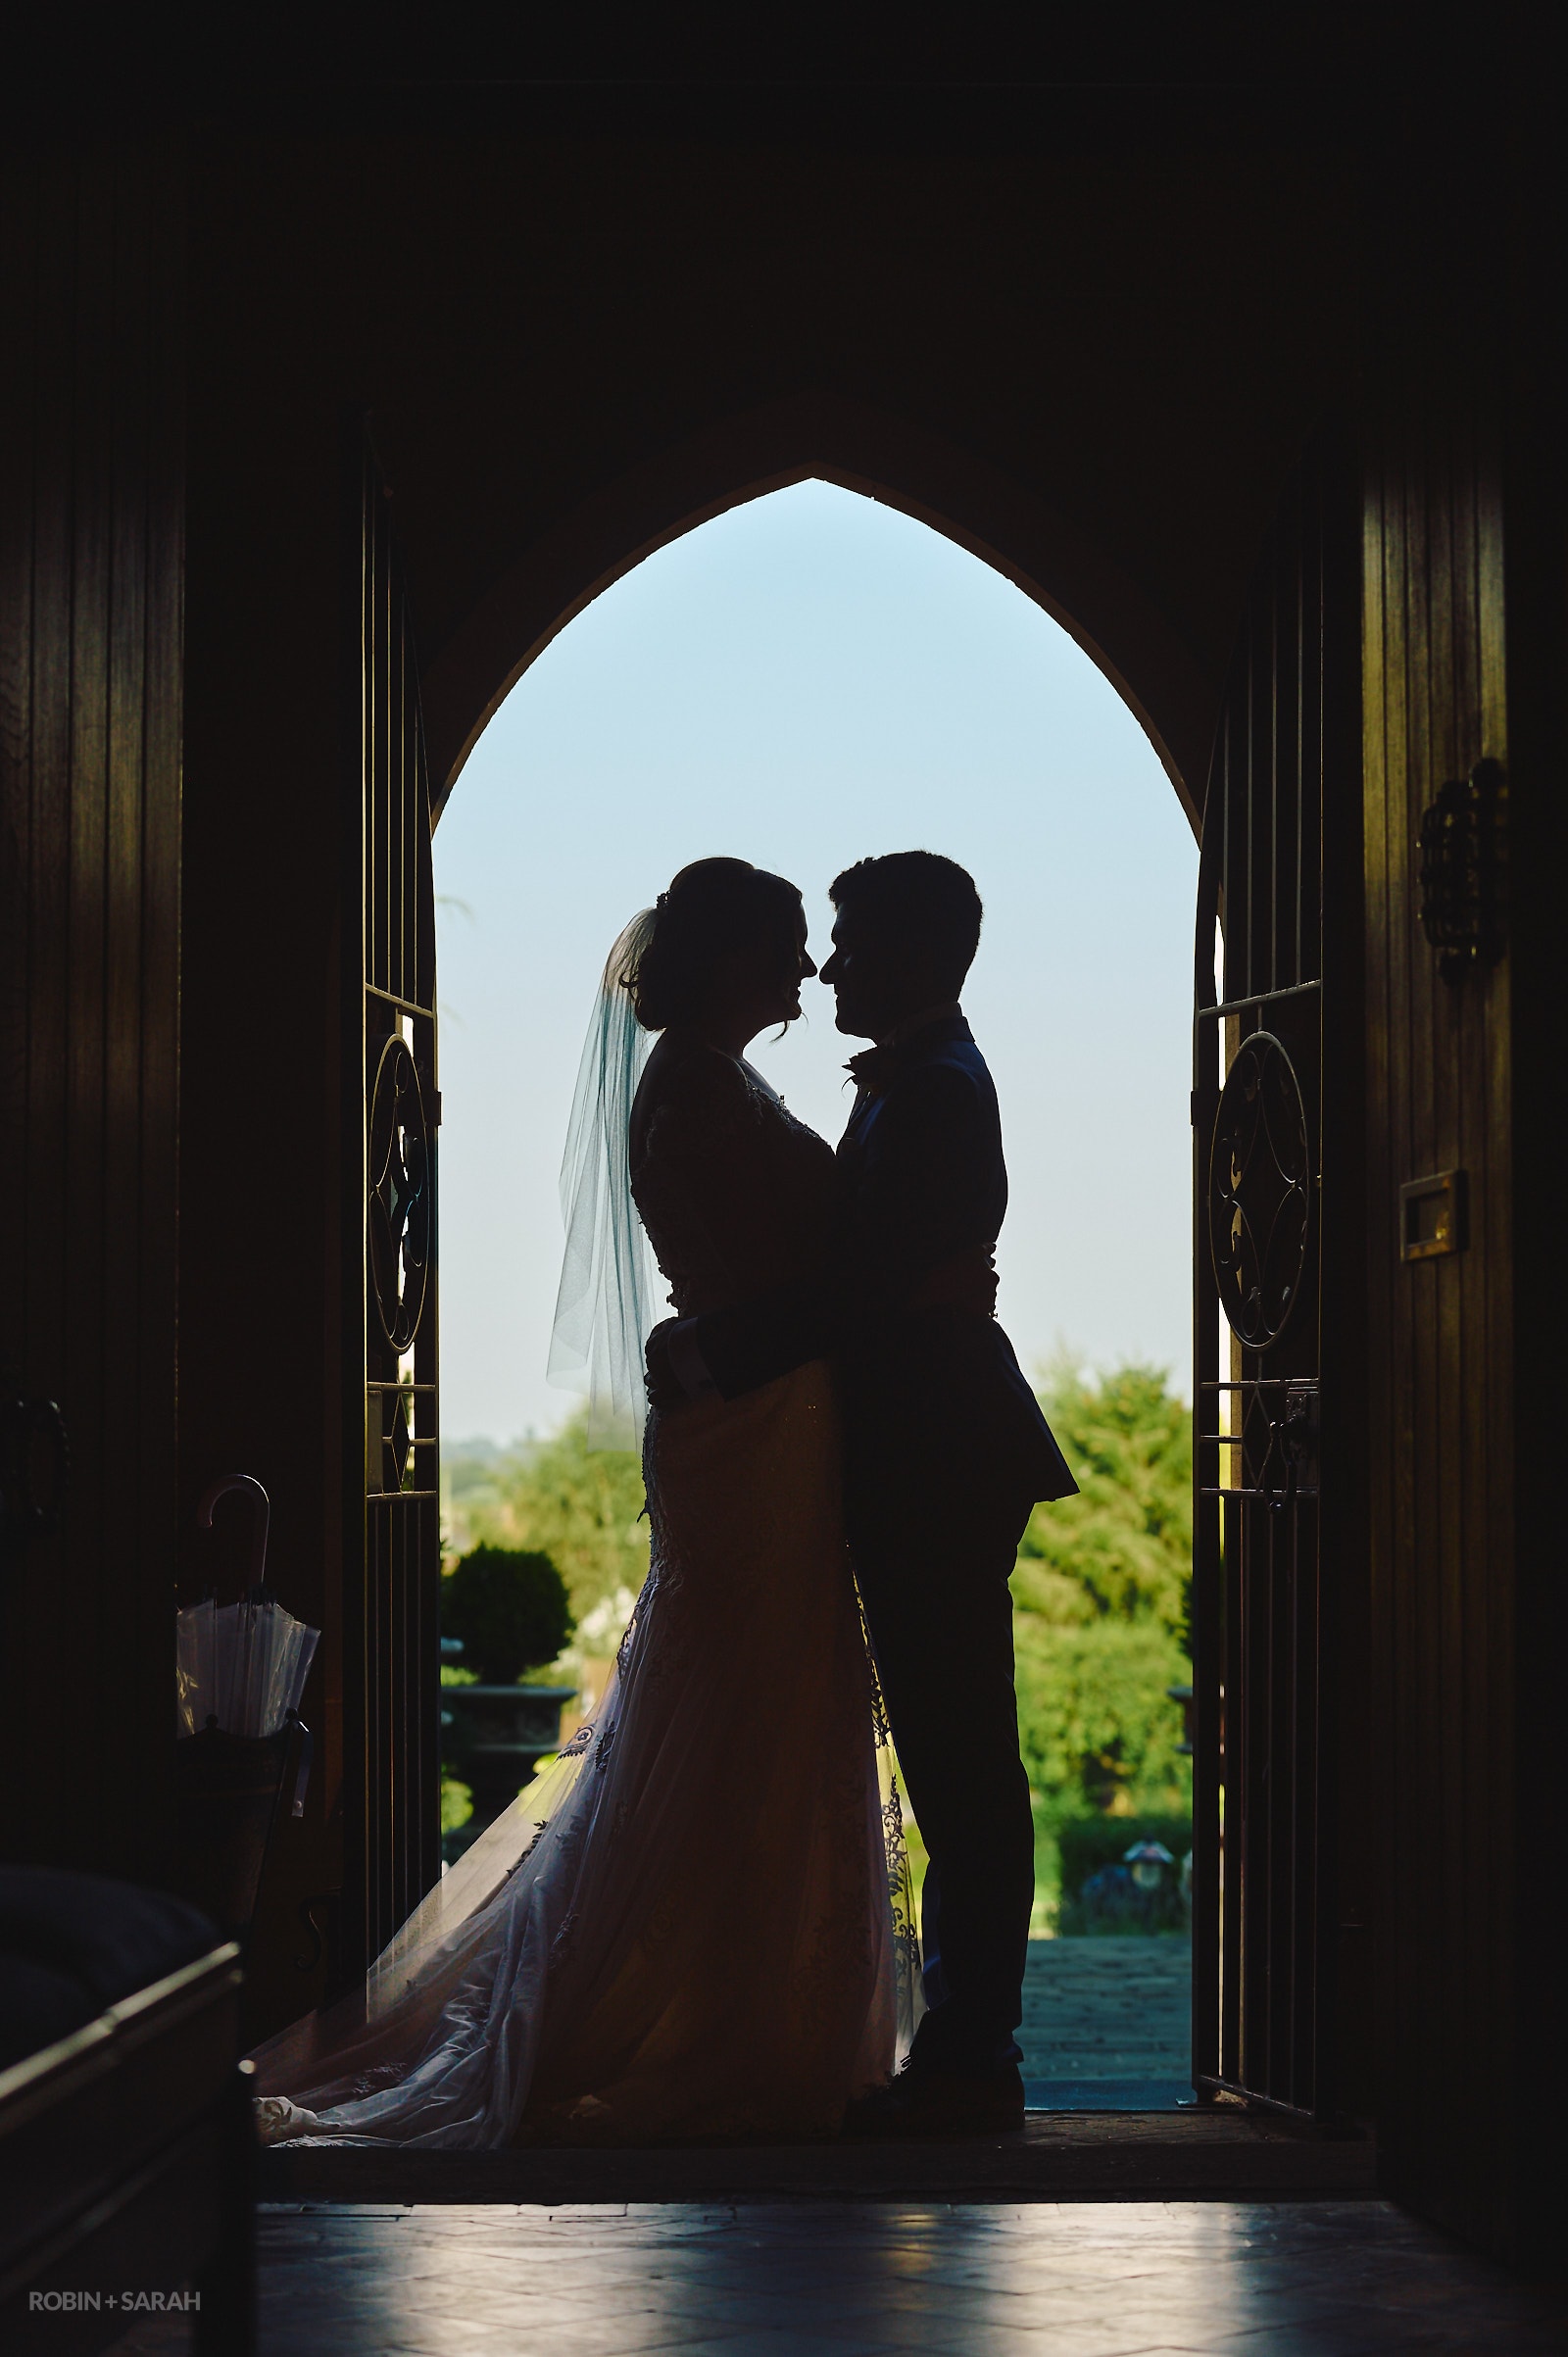 Bride and groom silhouetted in doorway